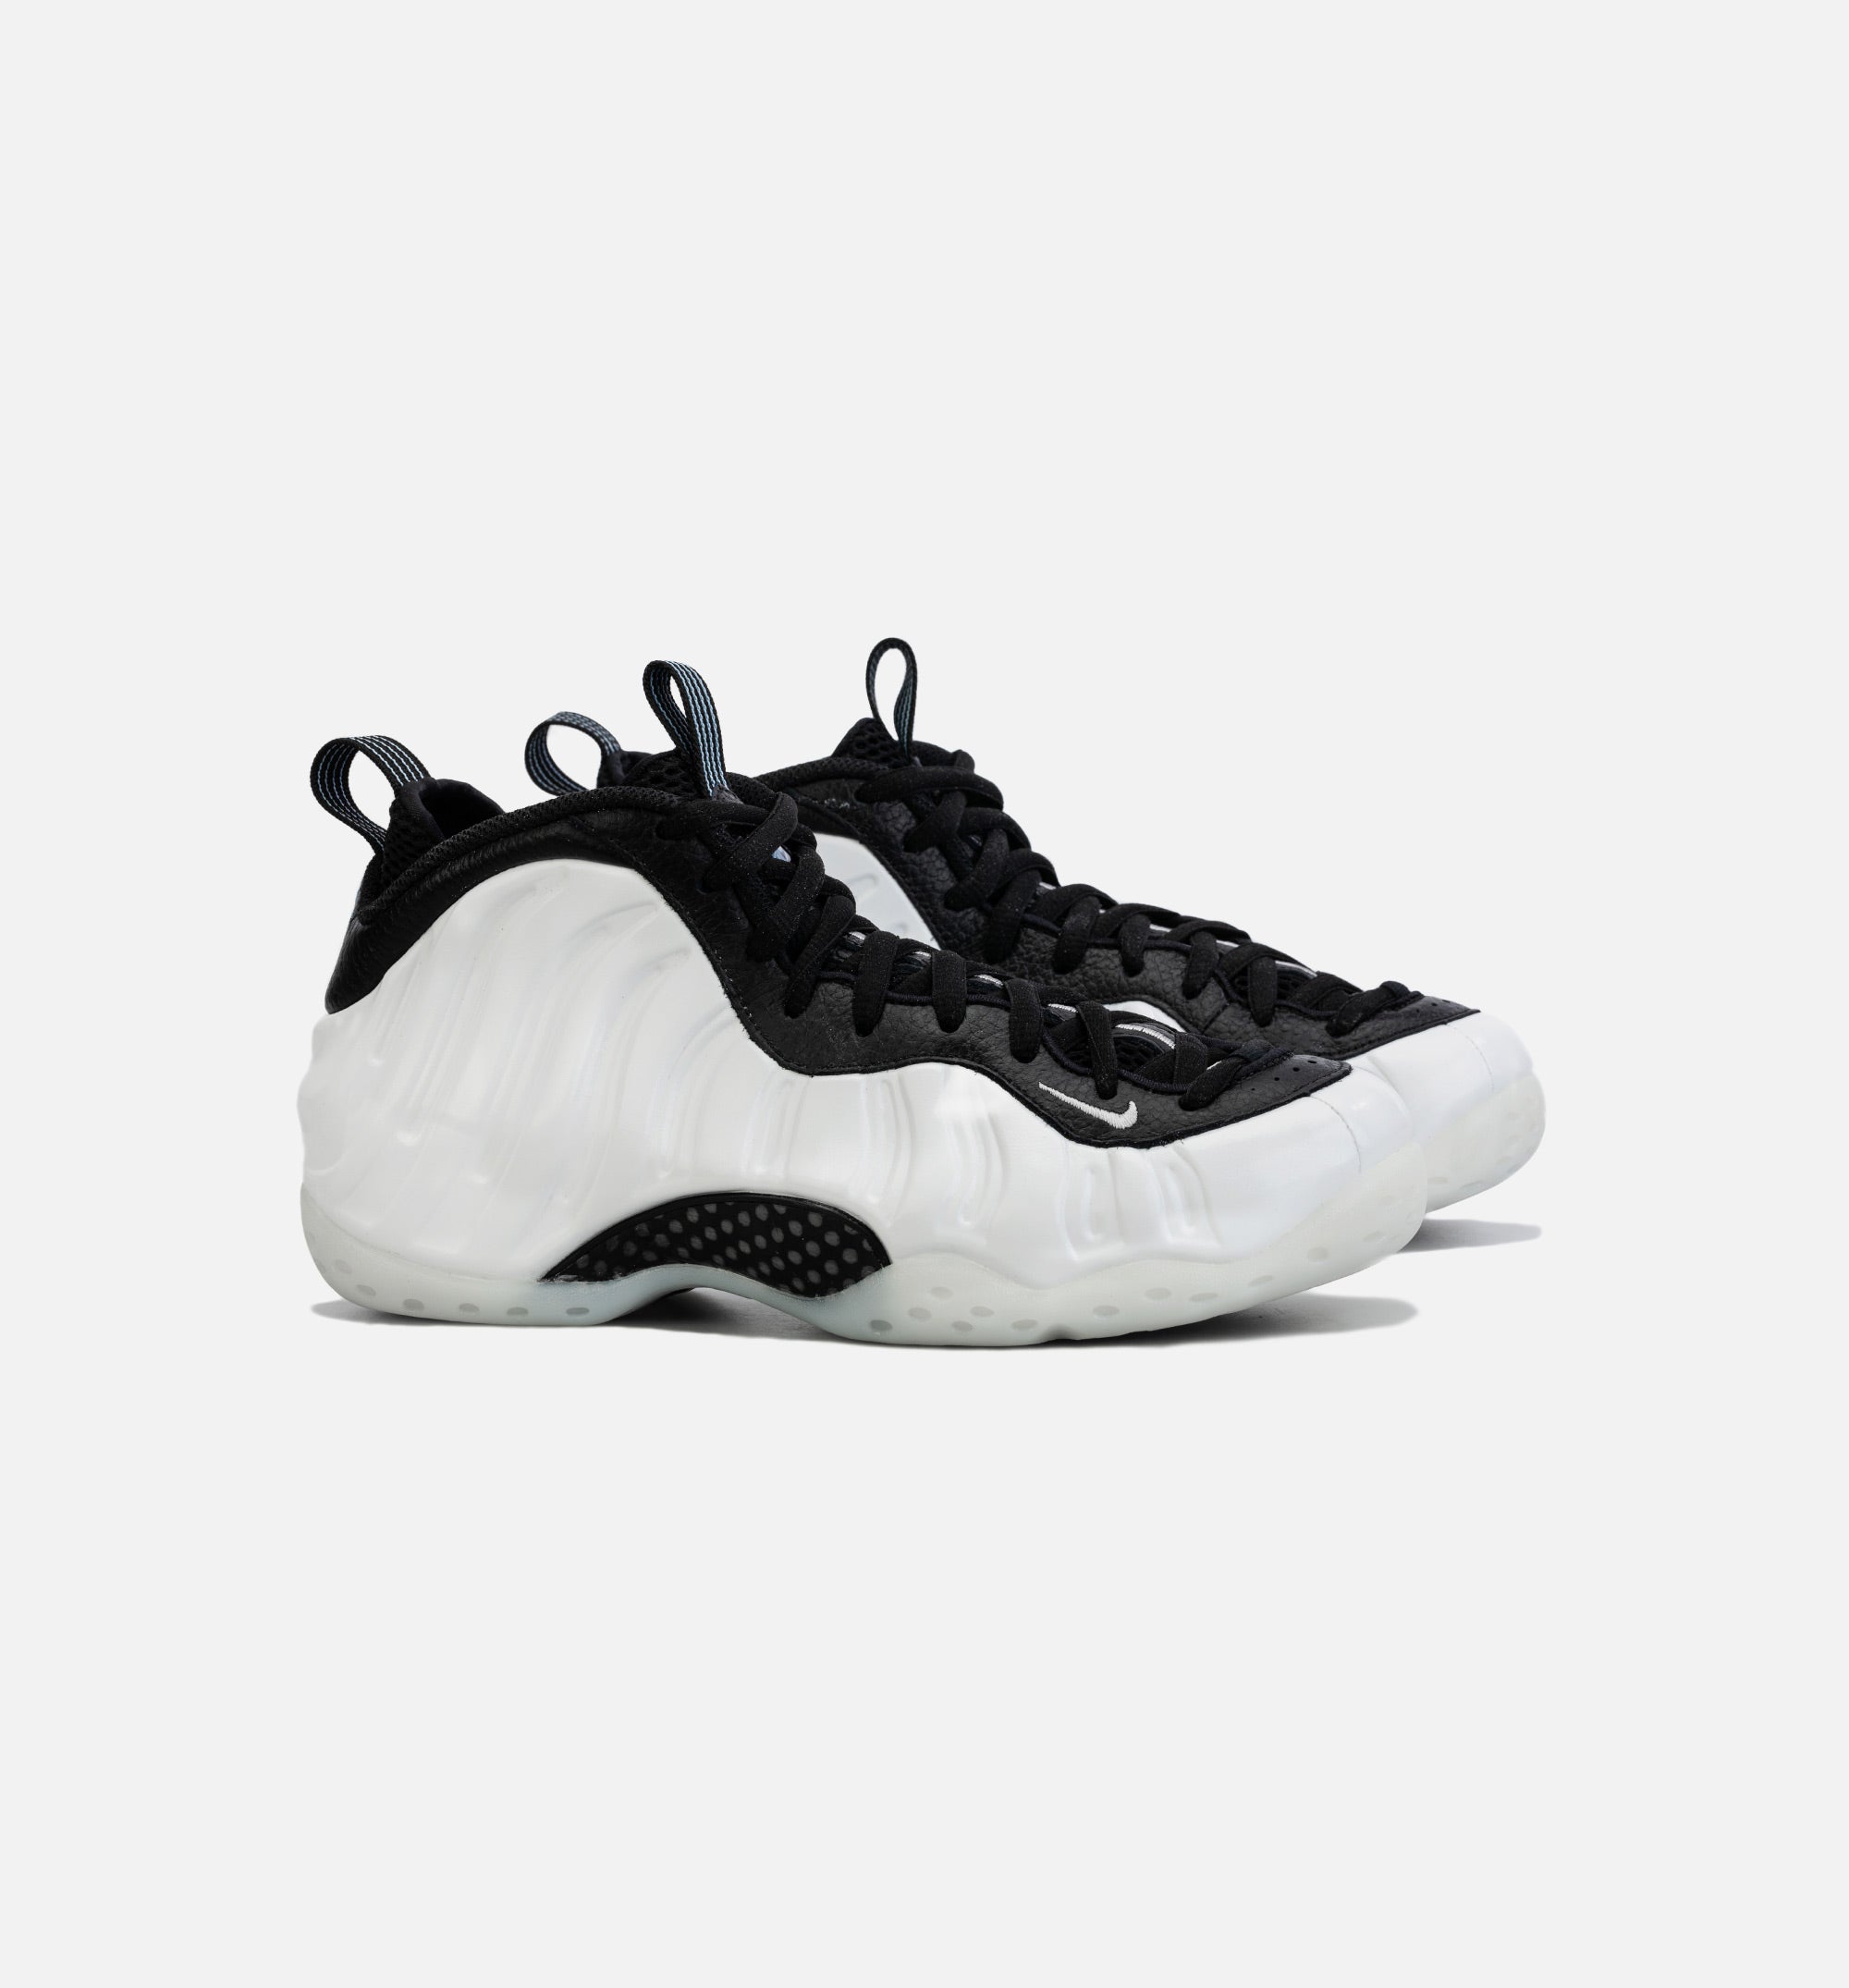 Men's Size 9.5 Nike Air Foamposite One Shoes White Black Penny PE  DV0815-100 New